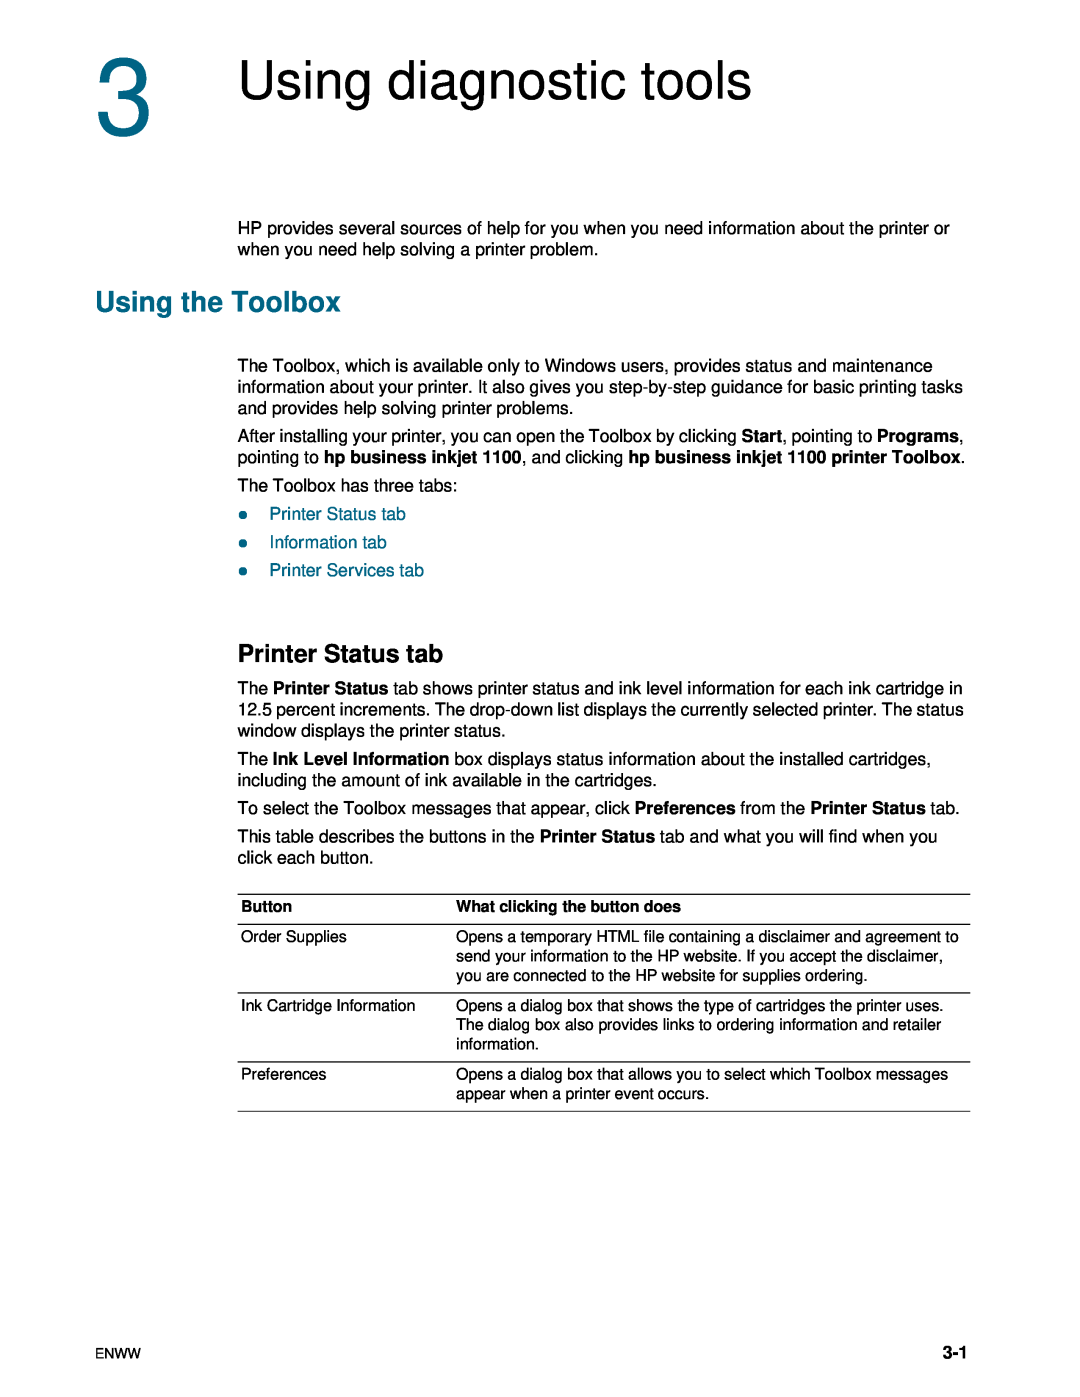 HP 1100dtn manual Using diagnostic tools, Using the Toolbox, Printer Status tab 